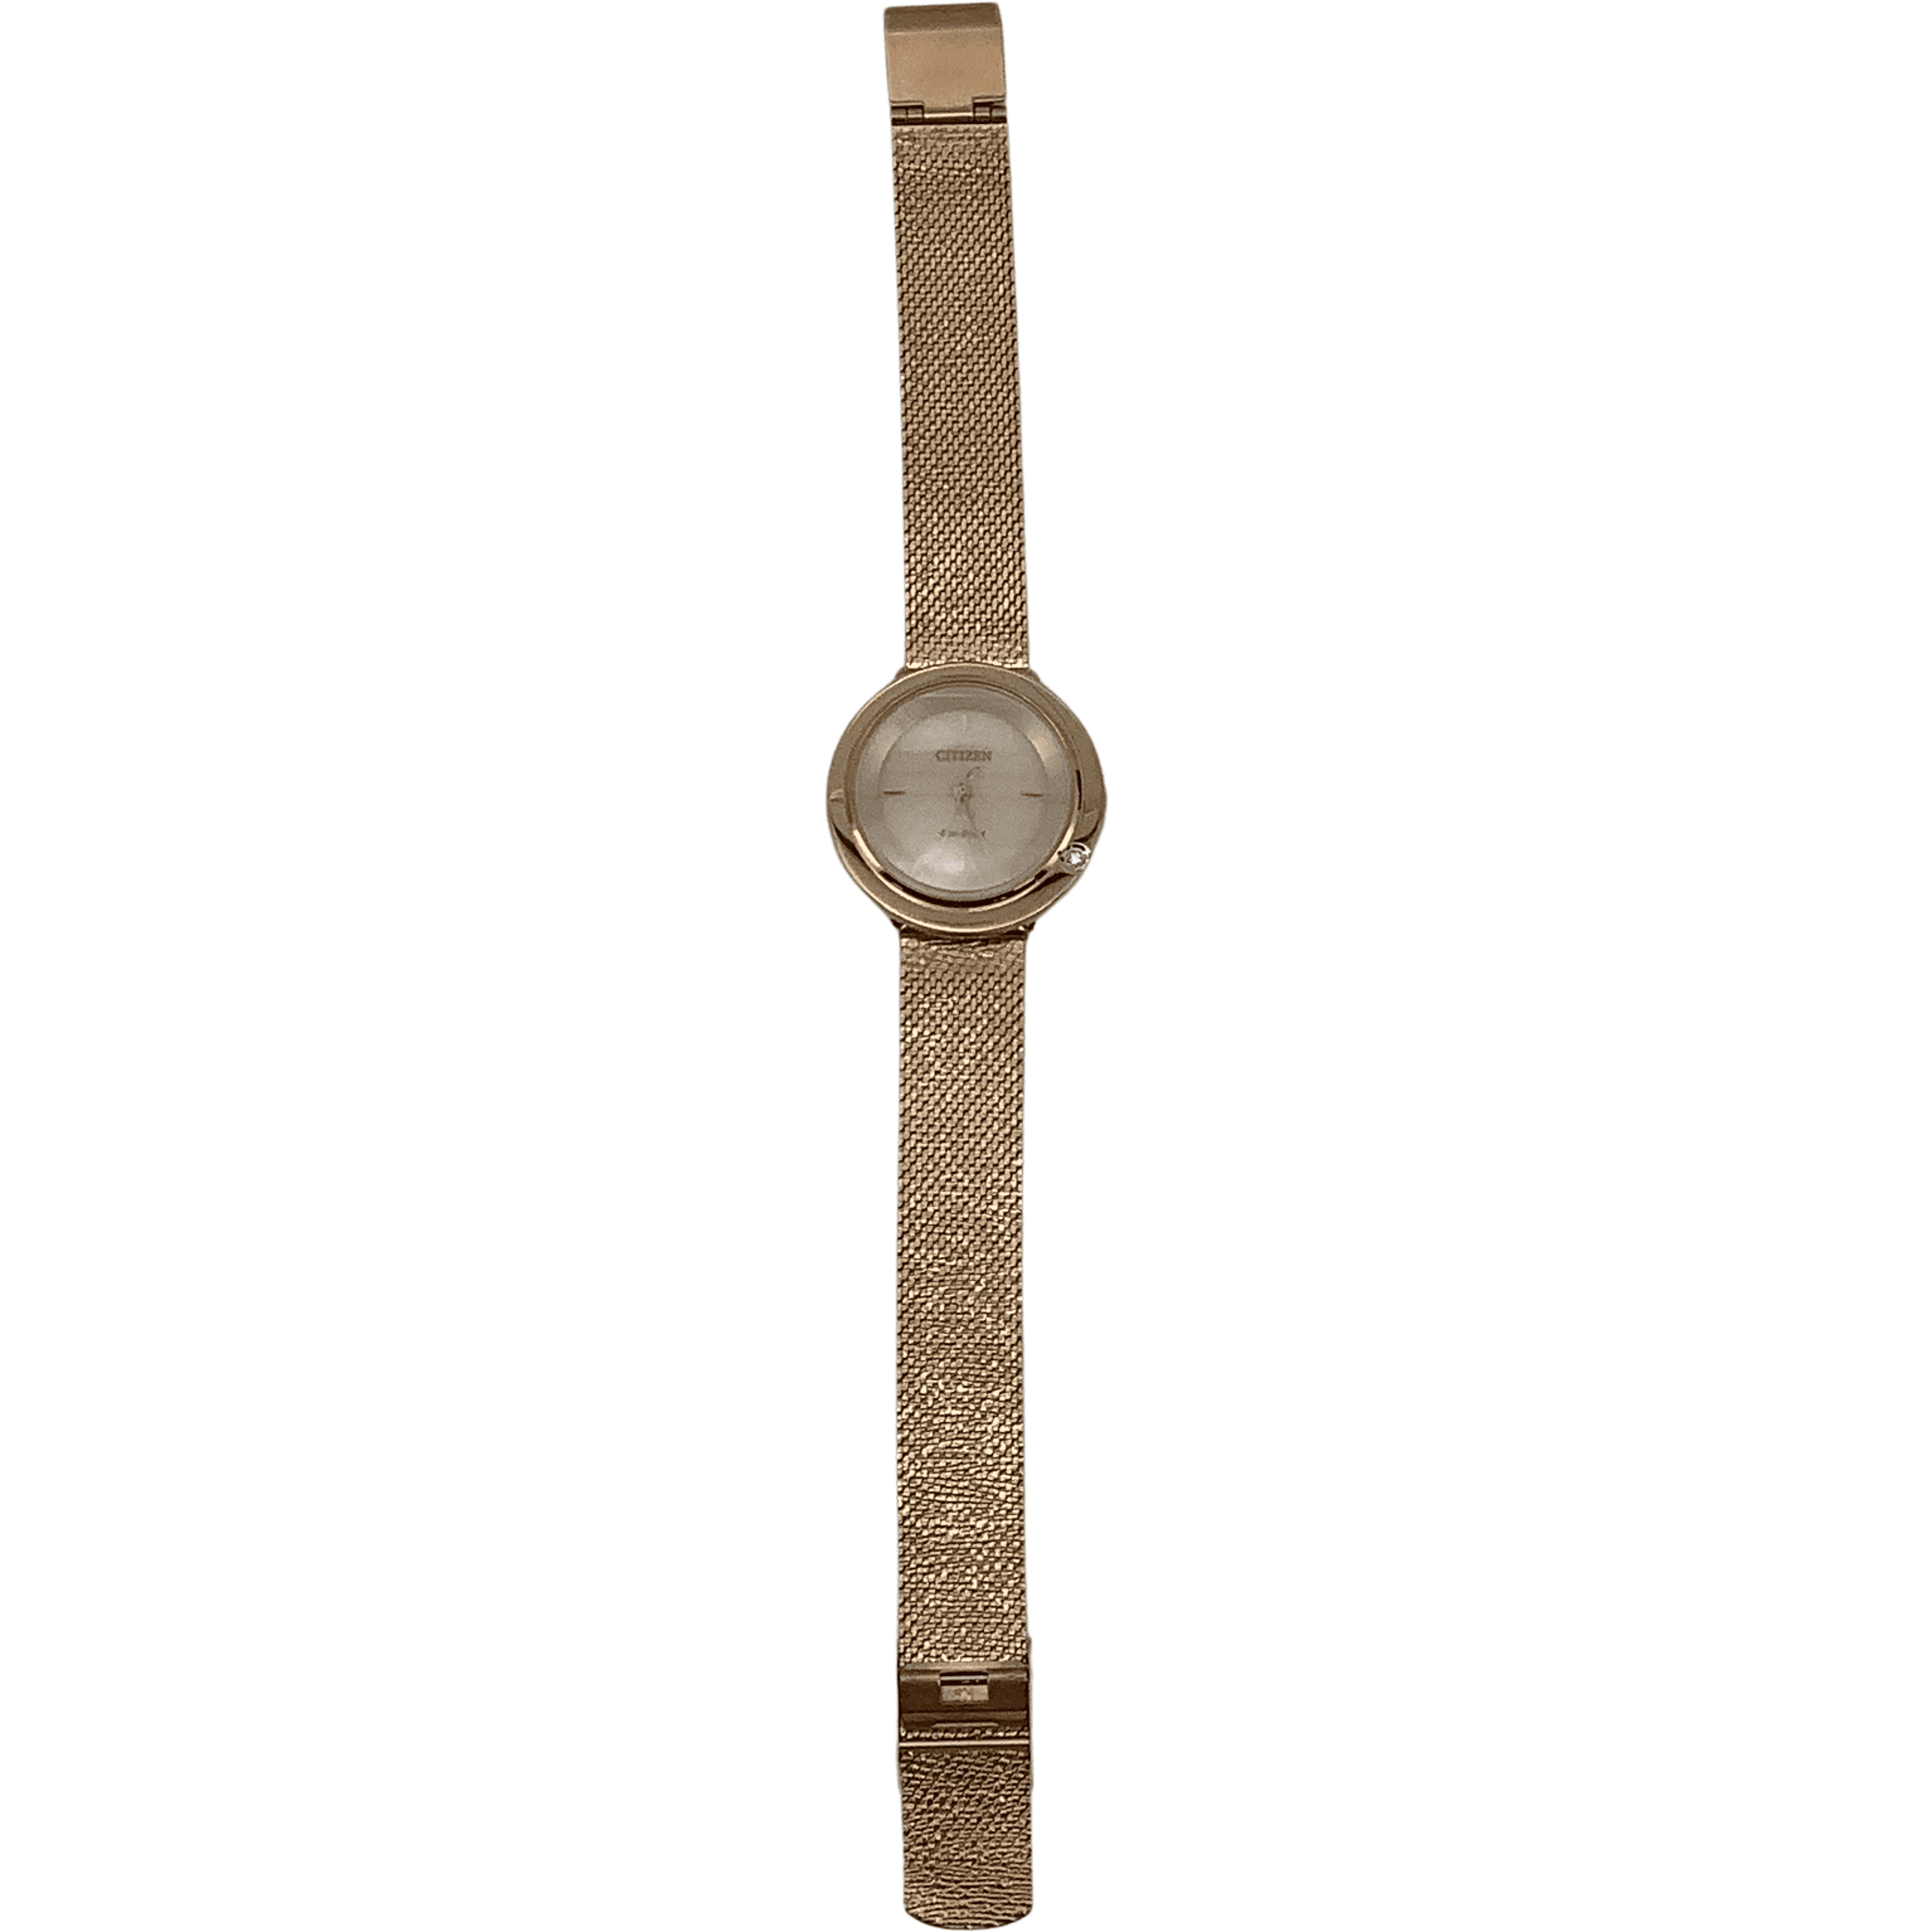 Citizen Women's Analog Wrist Watch / Rose Gold / Diamond Patterned Bracelet / Women's Accessories